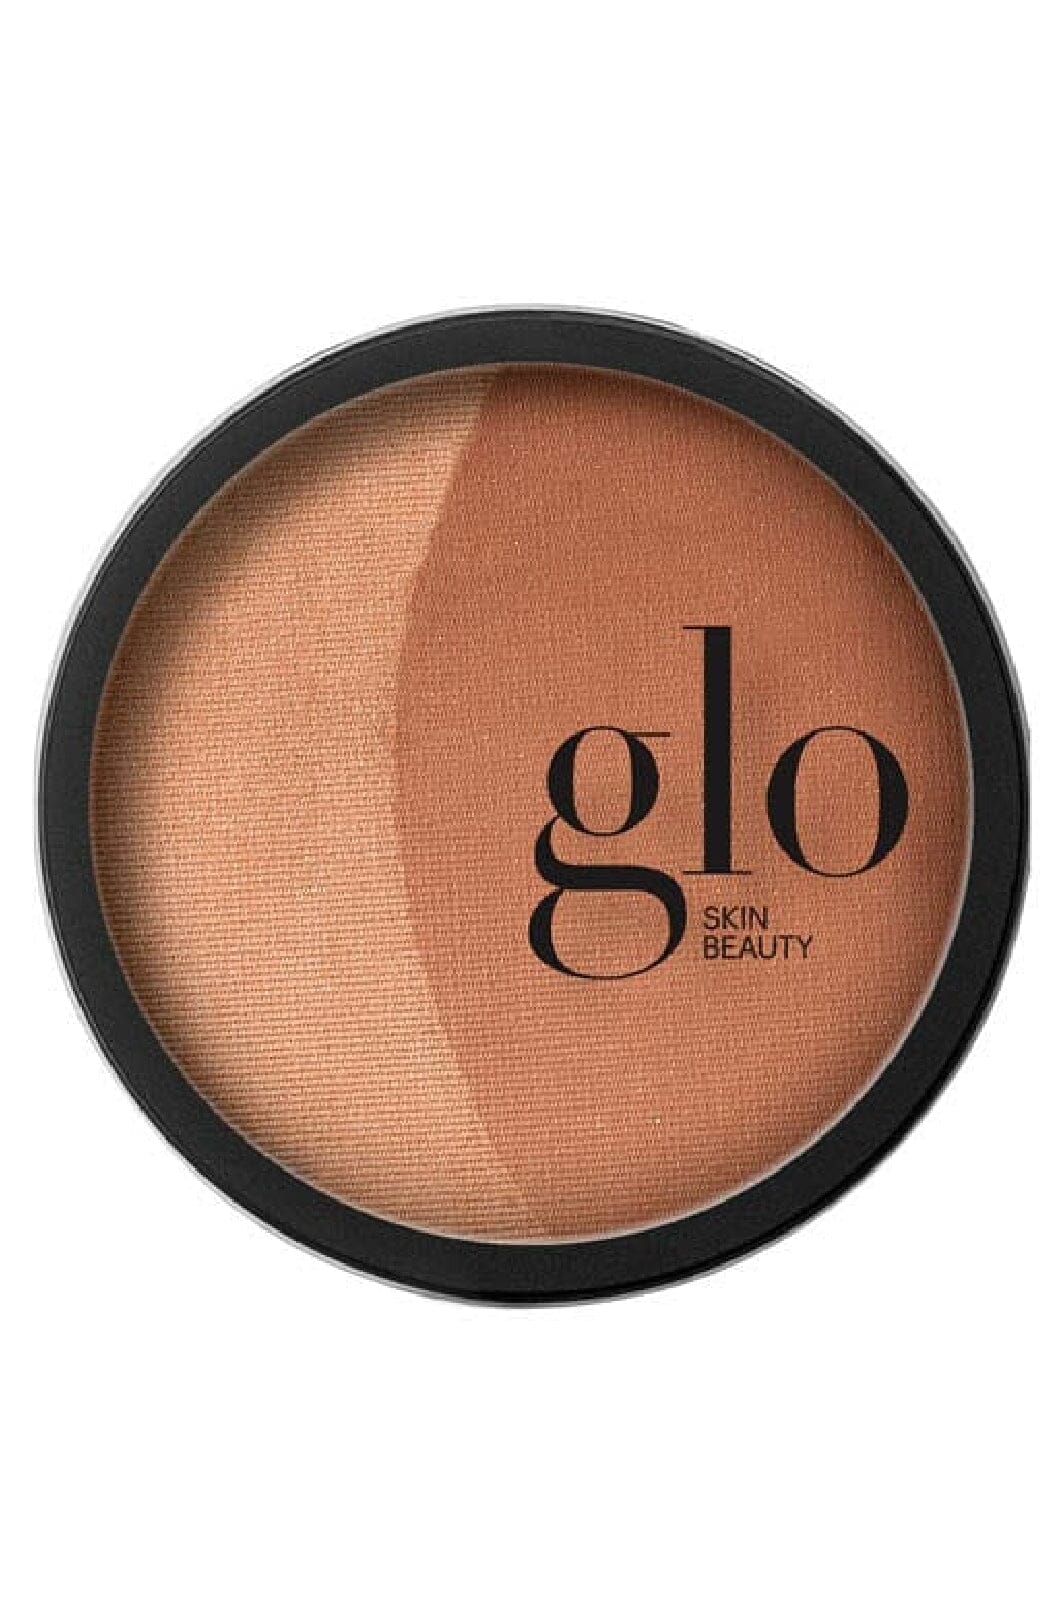 Glo Skin Beauty - Glo Bronze - Sunkiss, 9,9 g Bronzer 